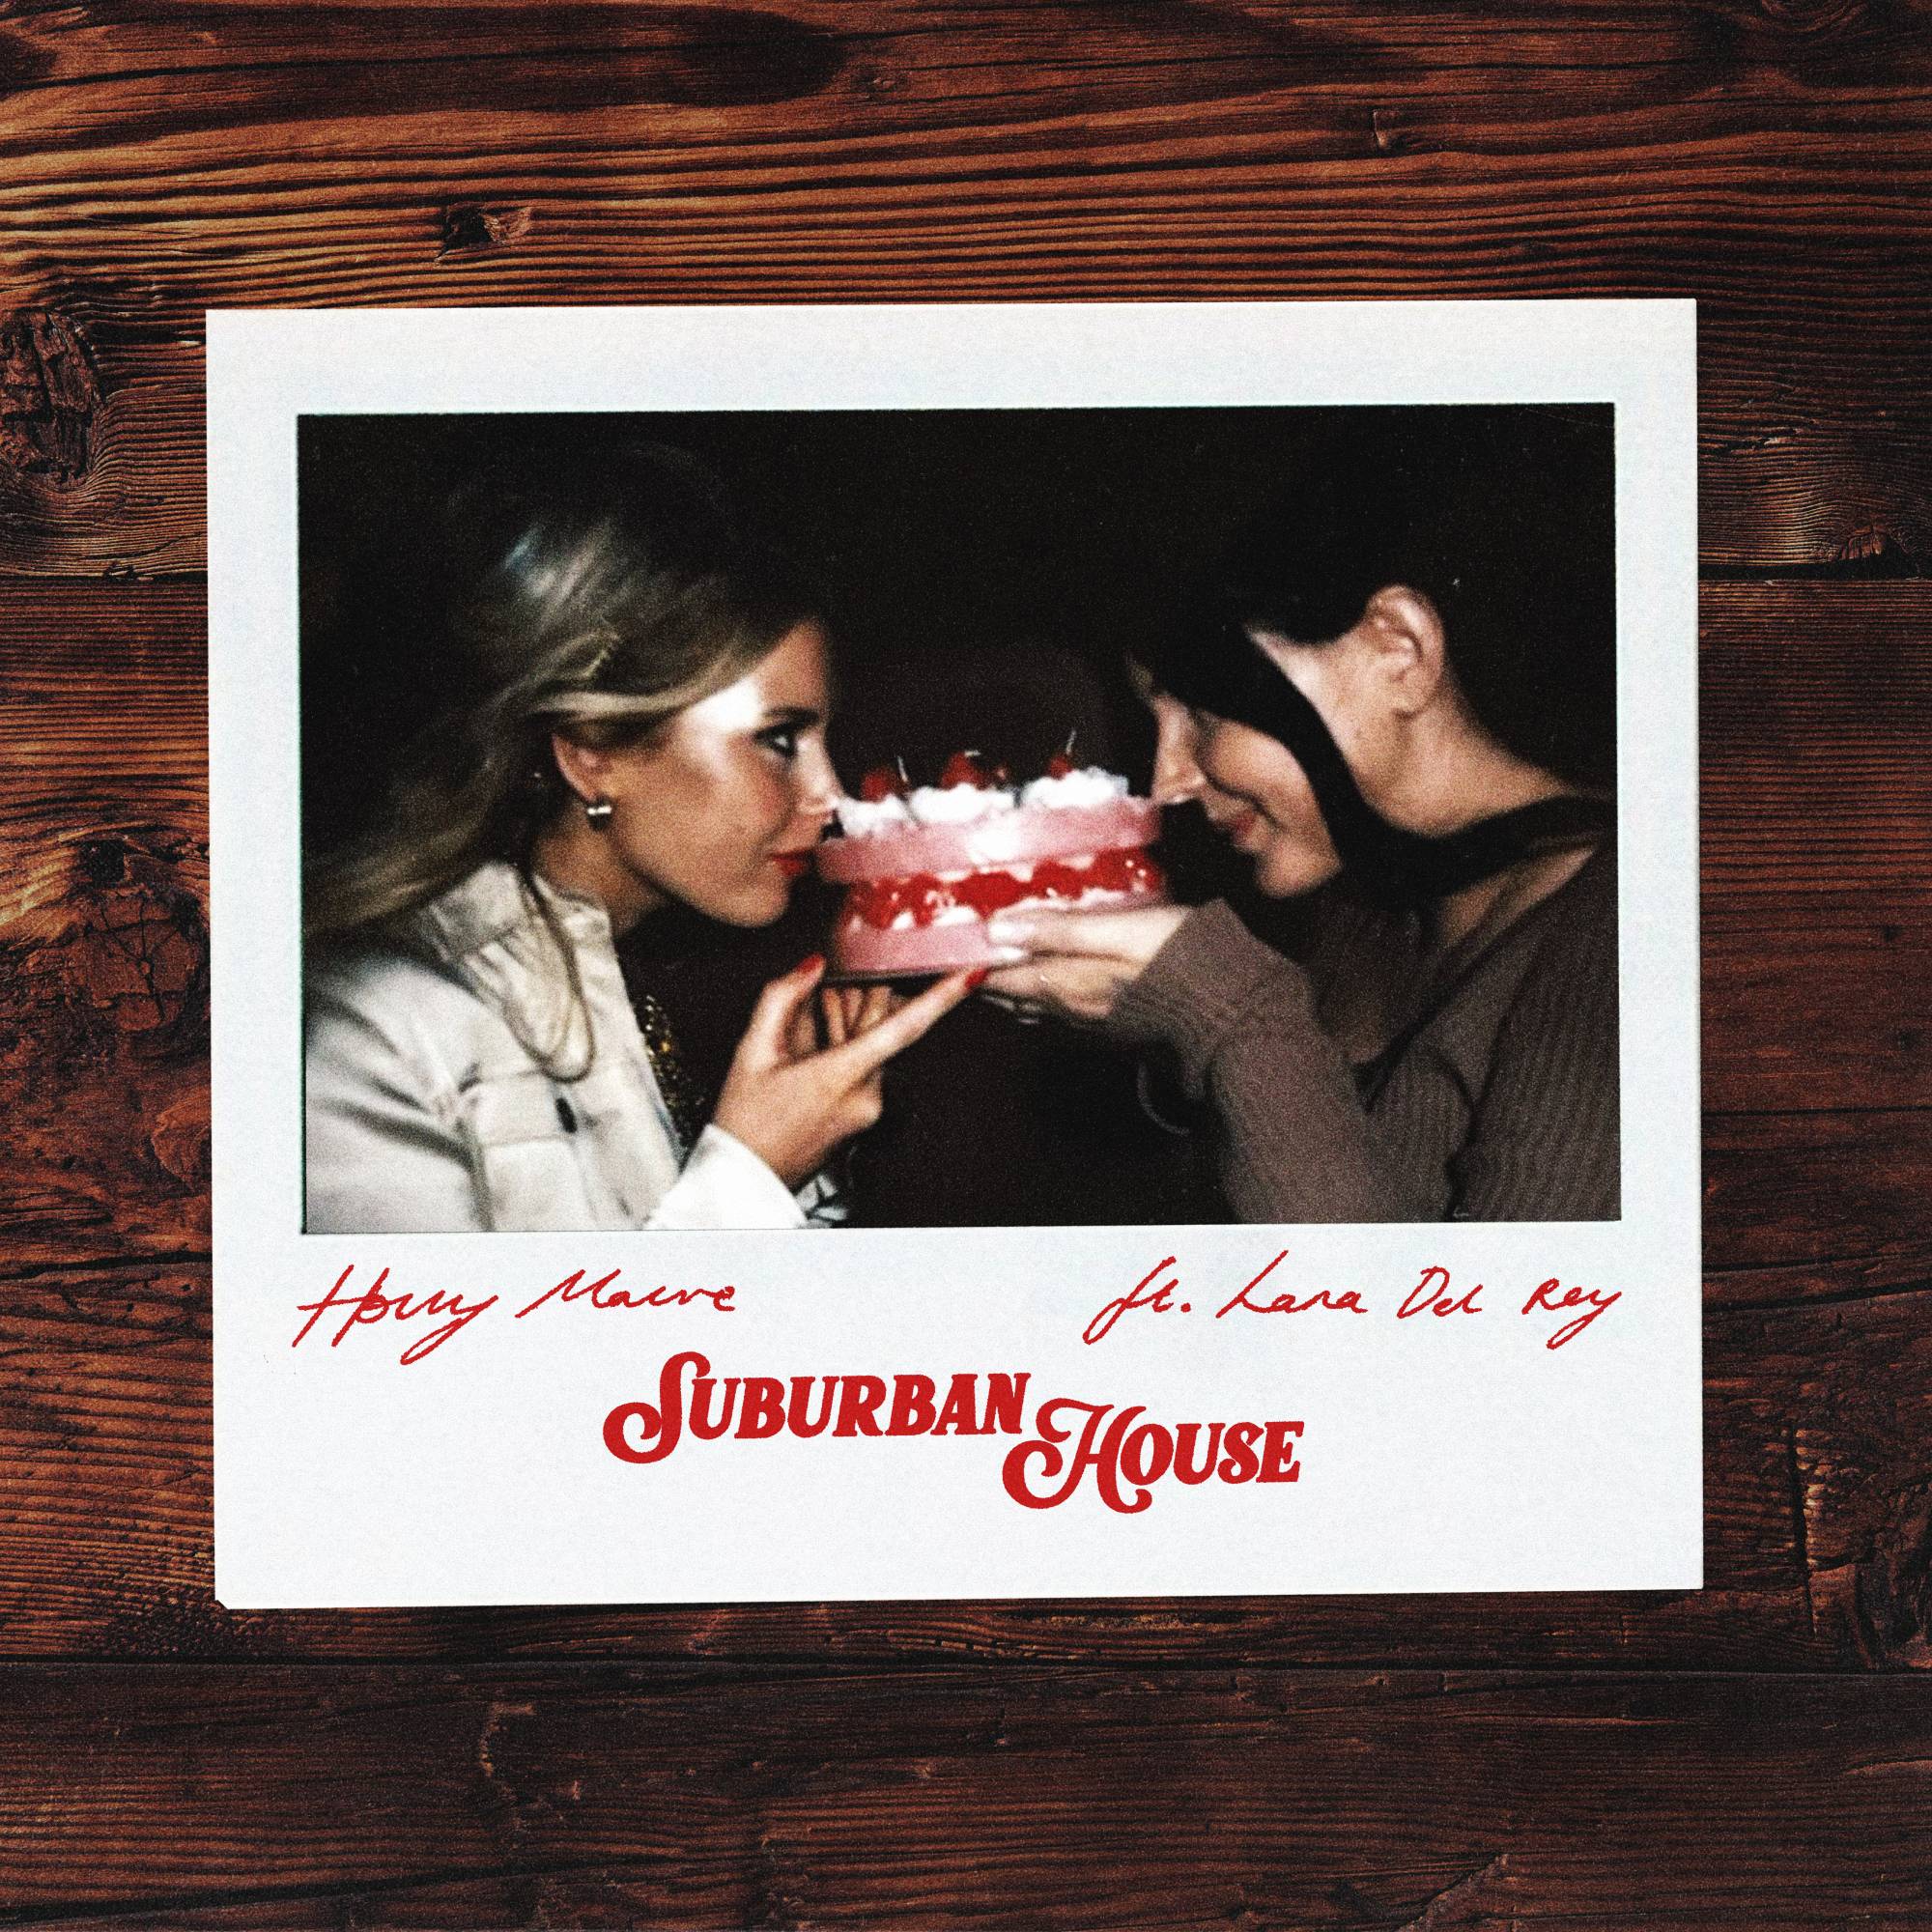 Holly Macve & Lana Del Rey — Suburban House cover artwork